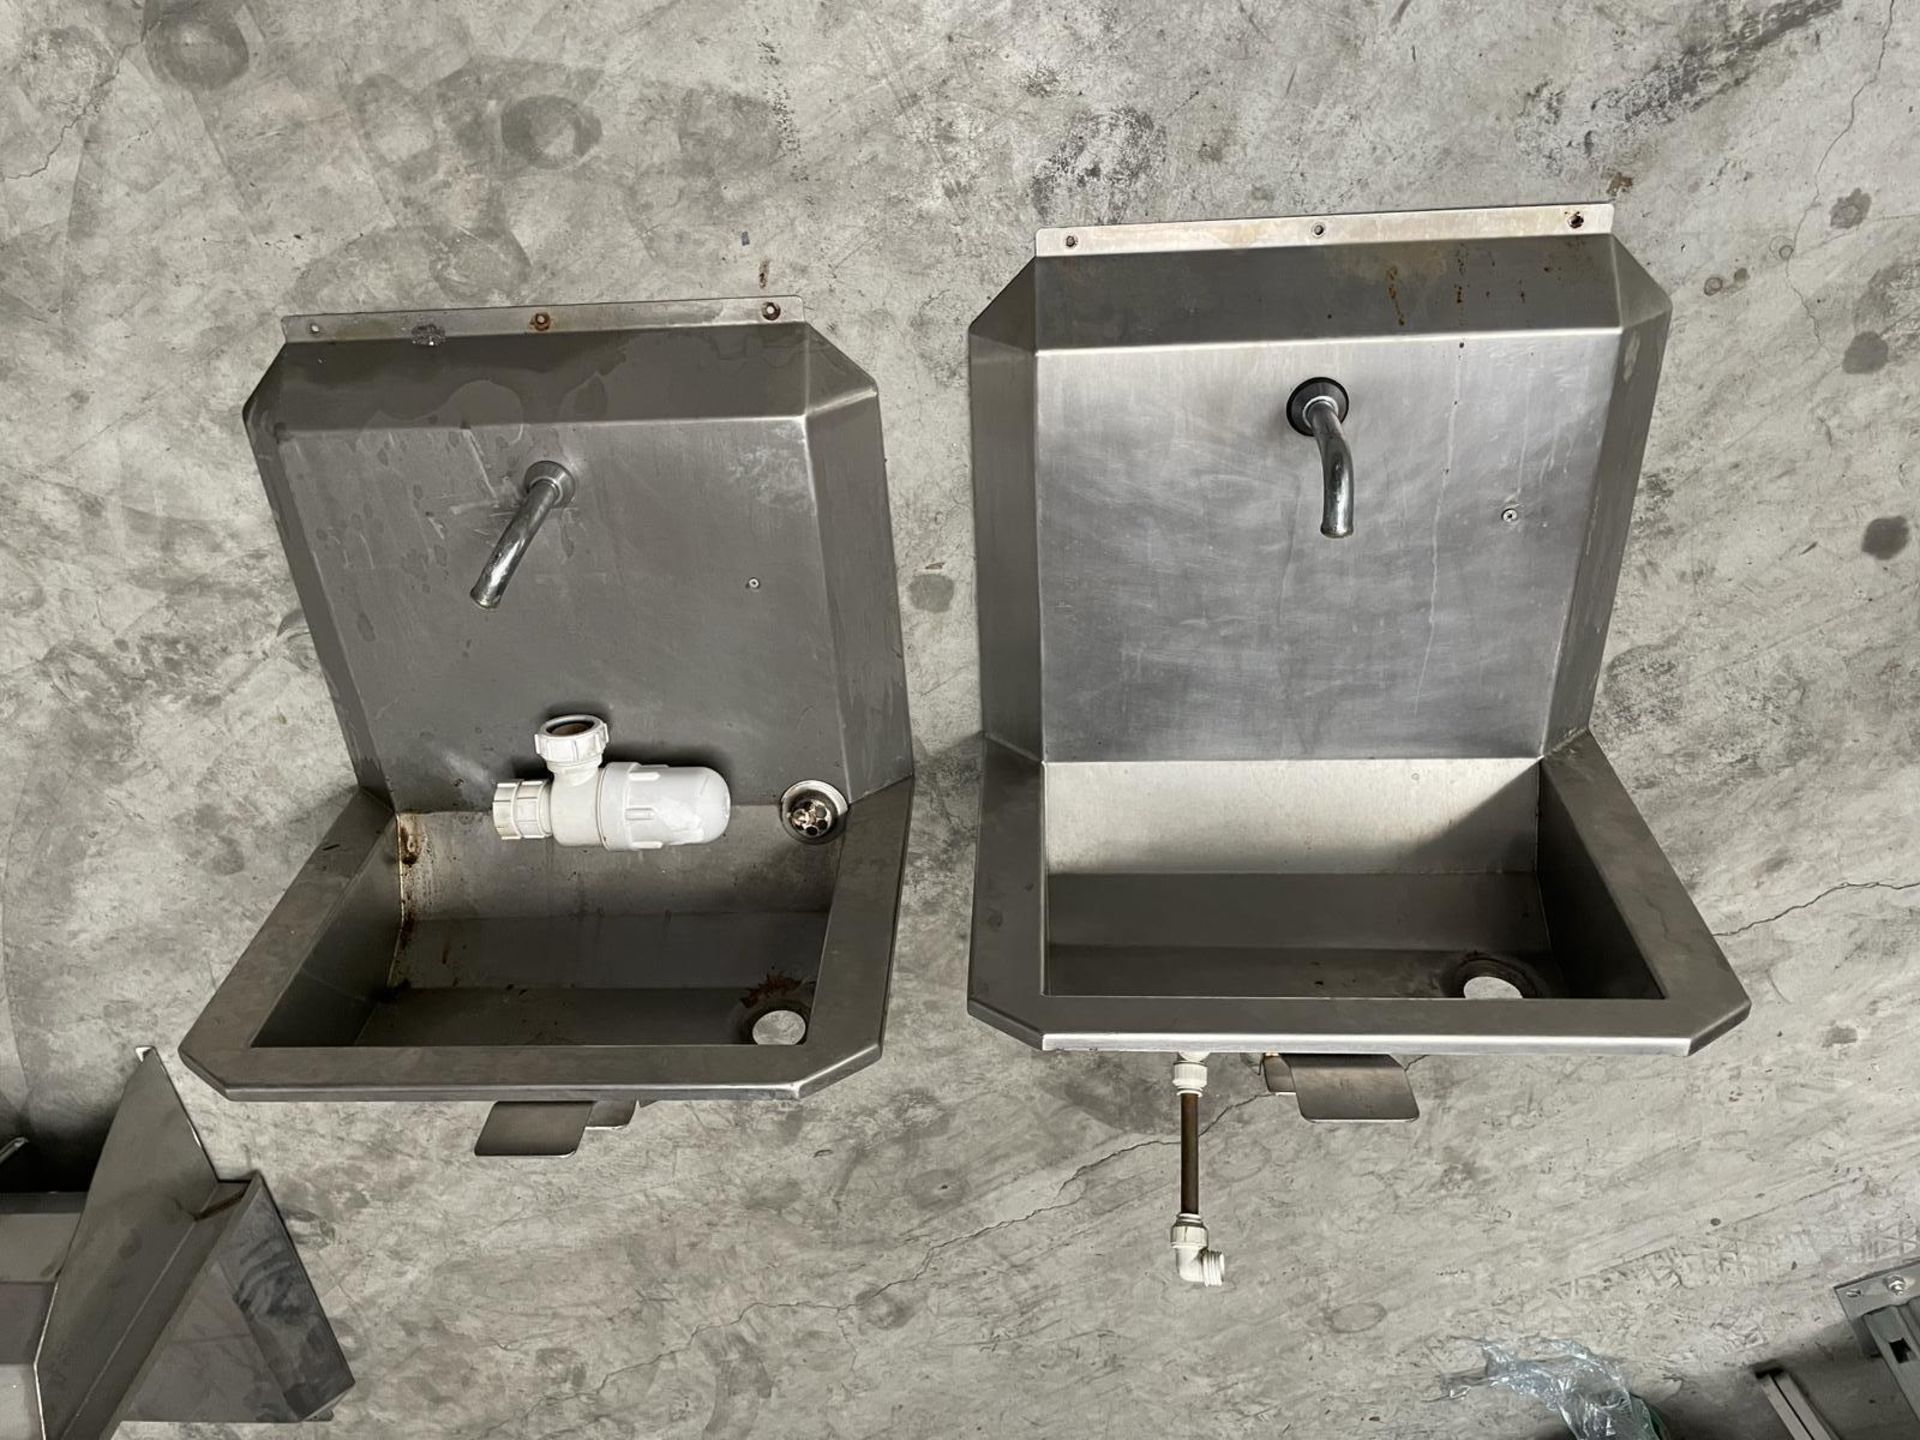 1 x Twin tap knee operated sink 1100 x 400 x 650 mm, 2 x single tap knee operated sinks (1 missing - Image 4 of 4